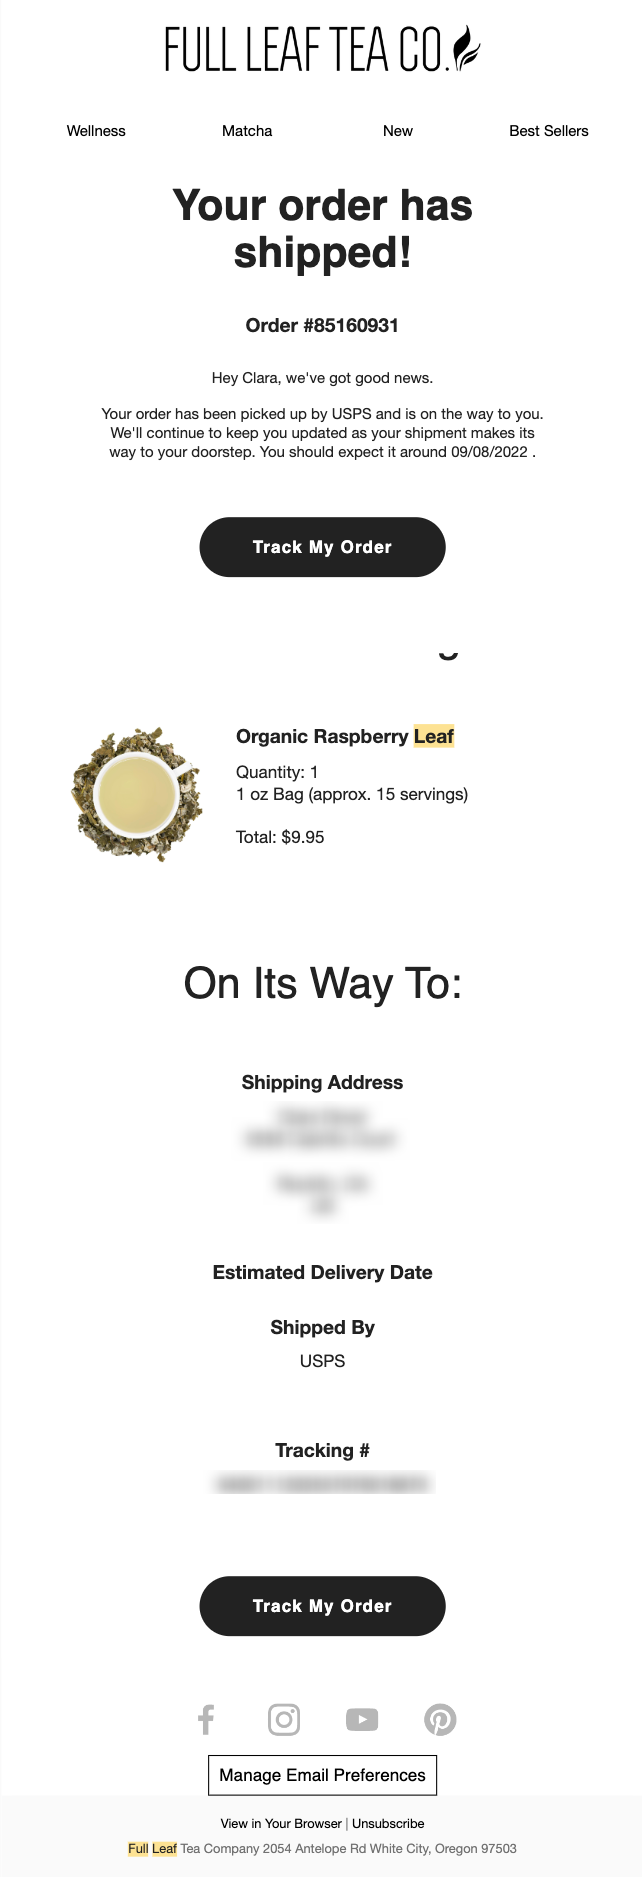 Full Leaf Tea Co. Shipment Created Industry Email Template screenshot